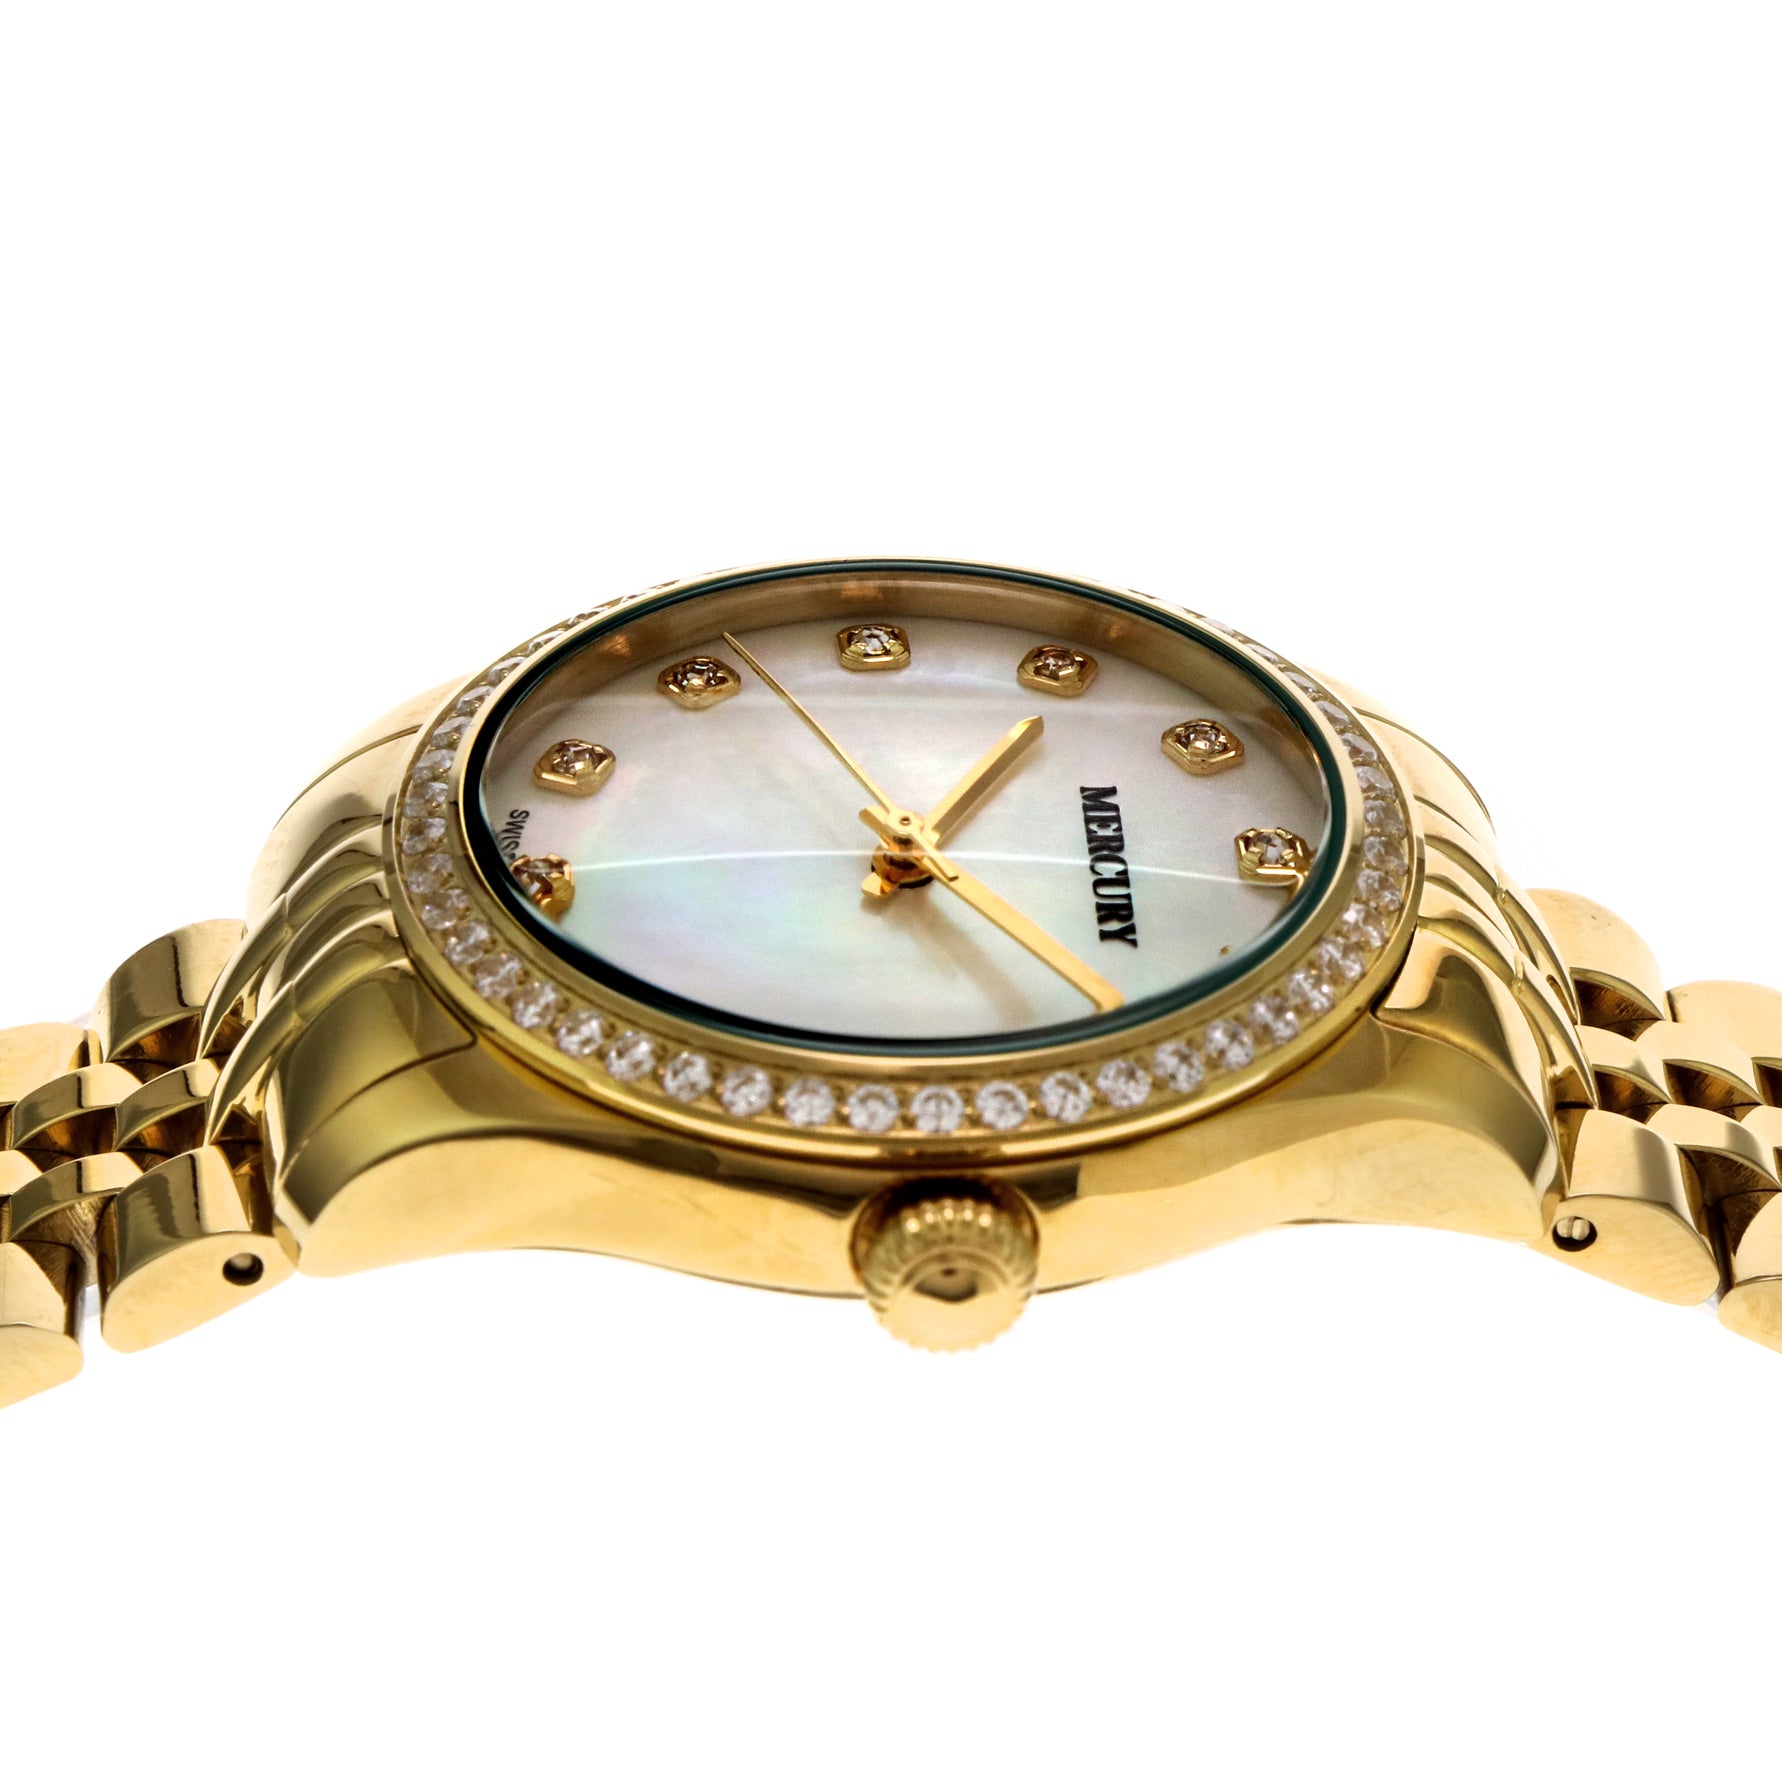 Mercury Women's Swiss Quartz Watch with Pearly White Dial - MER-0023